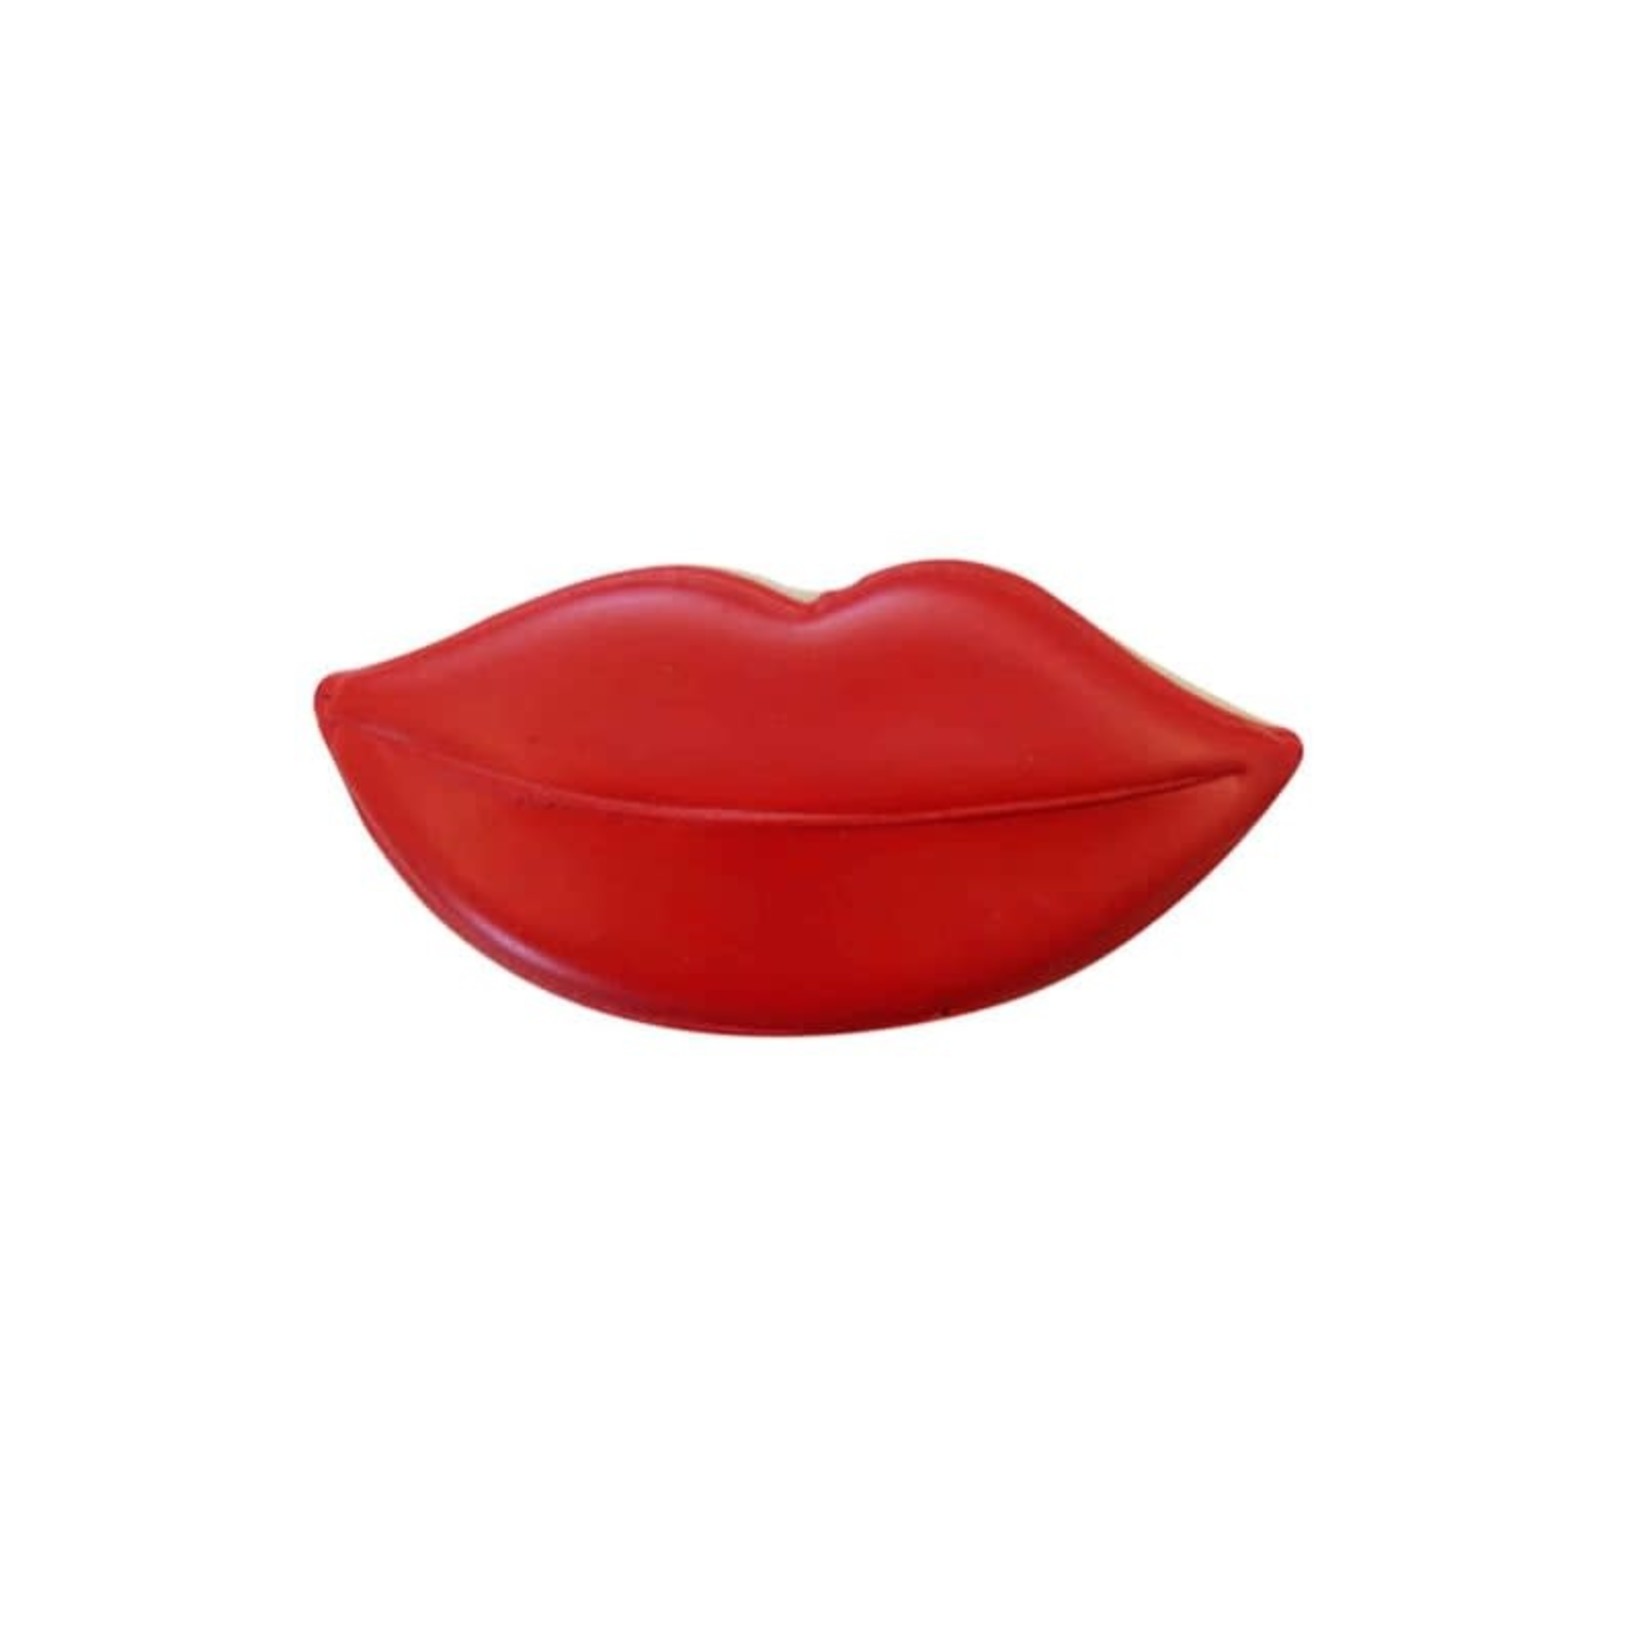 R&M INTERNATIONAL R&M Cookie Cutter Lips  3.5”  Red DNR